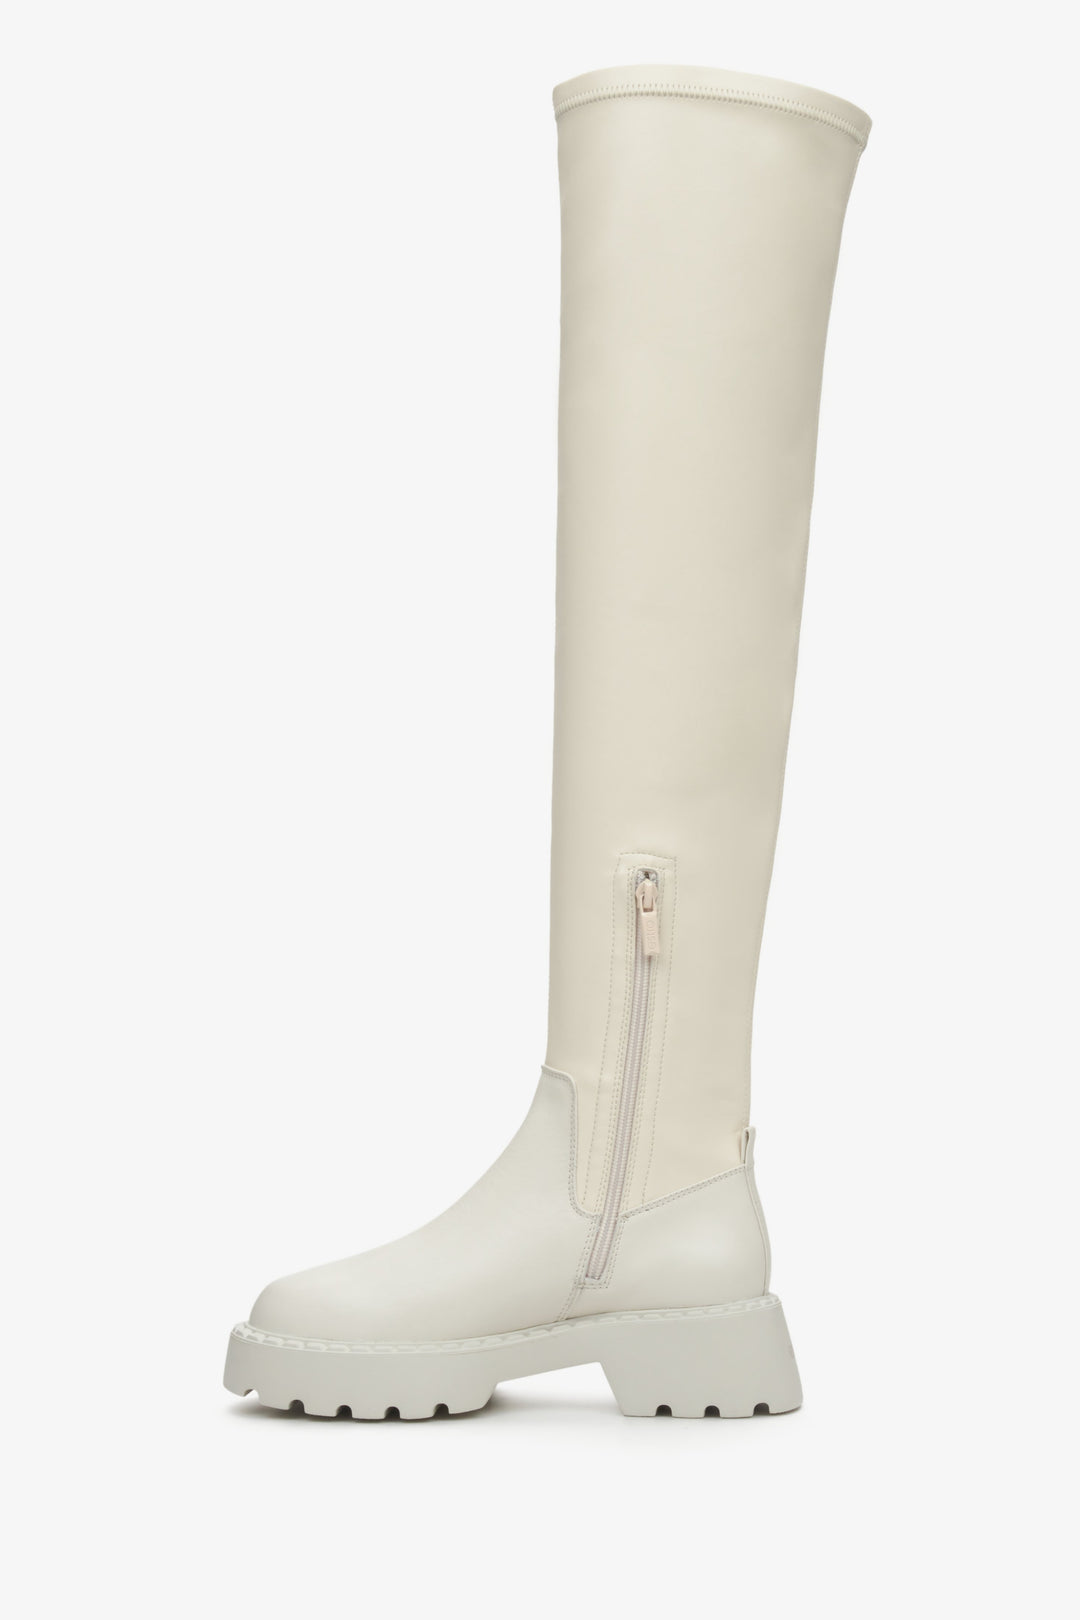 Estro light beige over-the-knee women's boots - shoe profile.